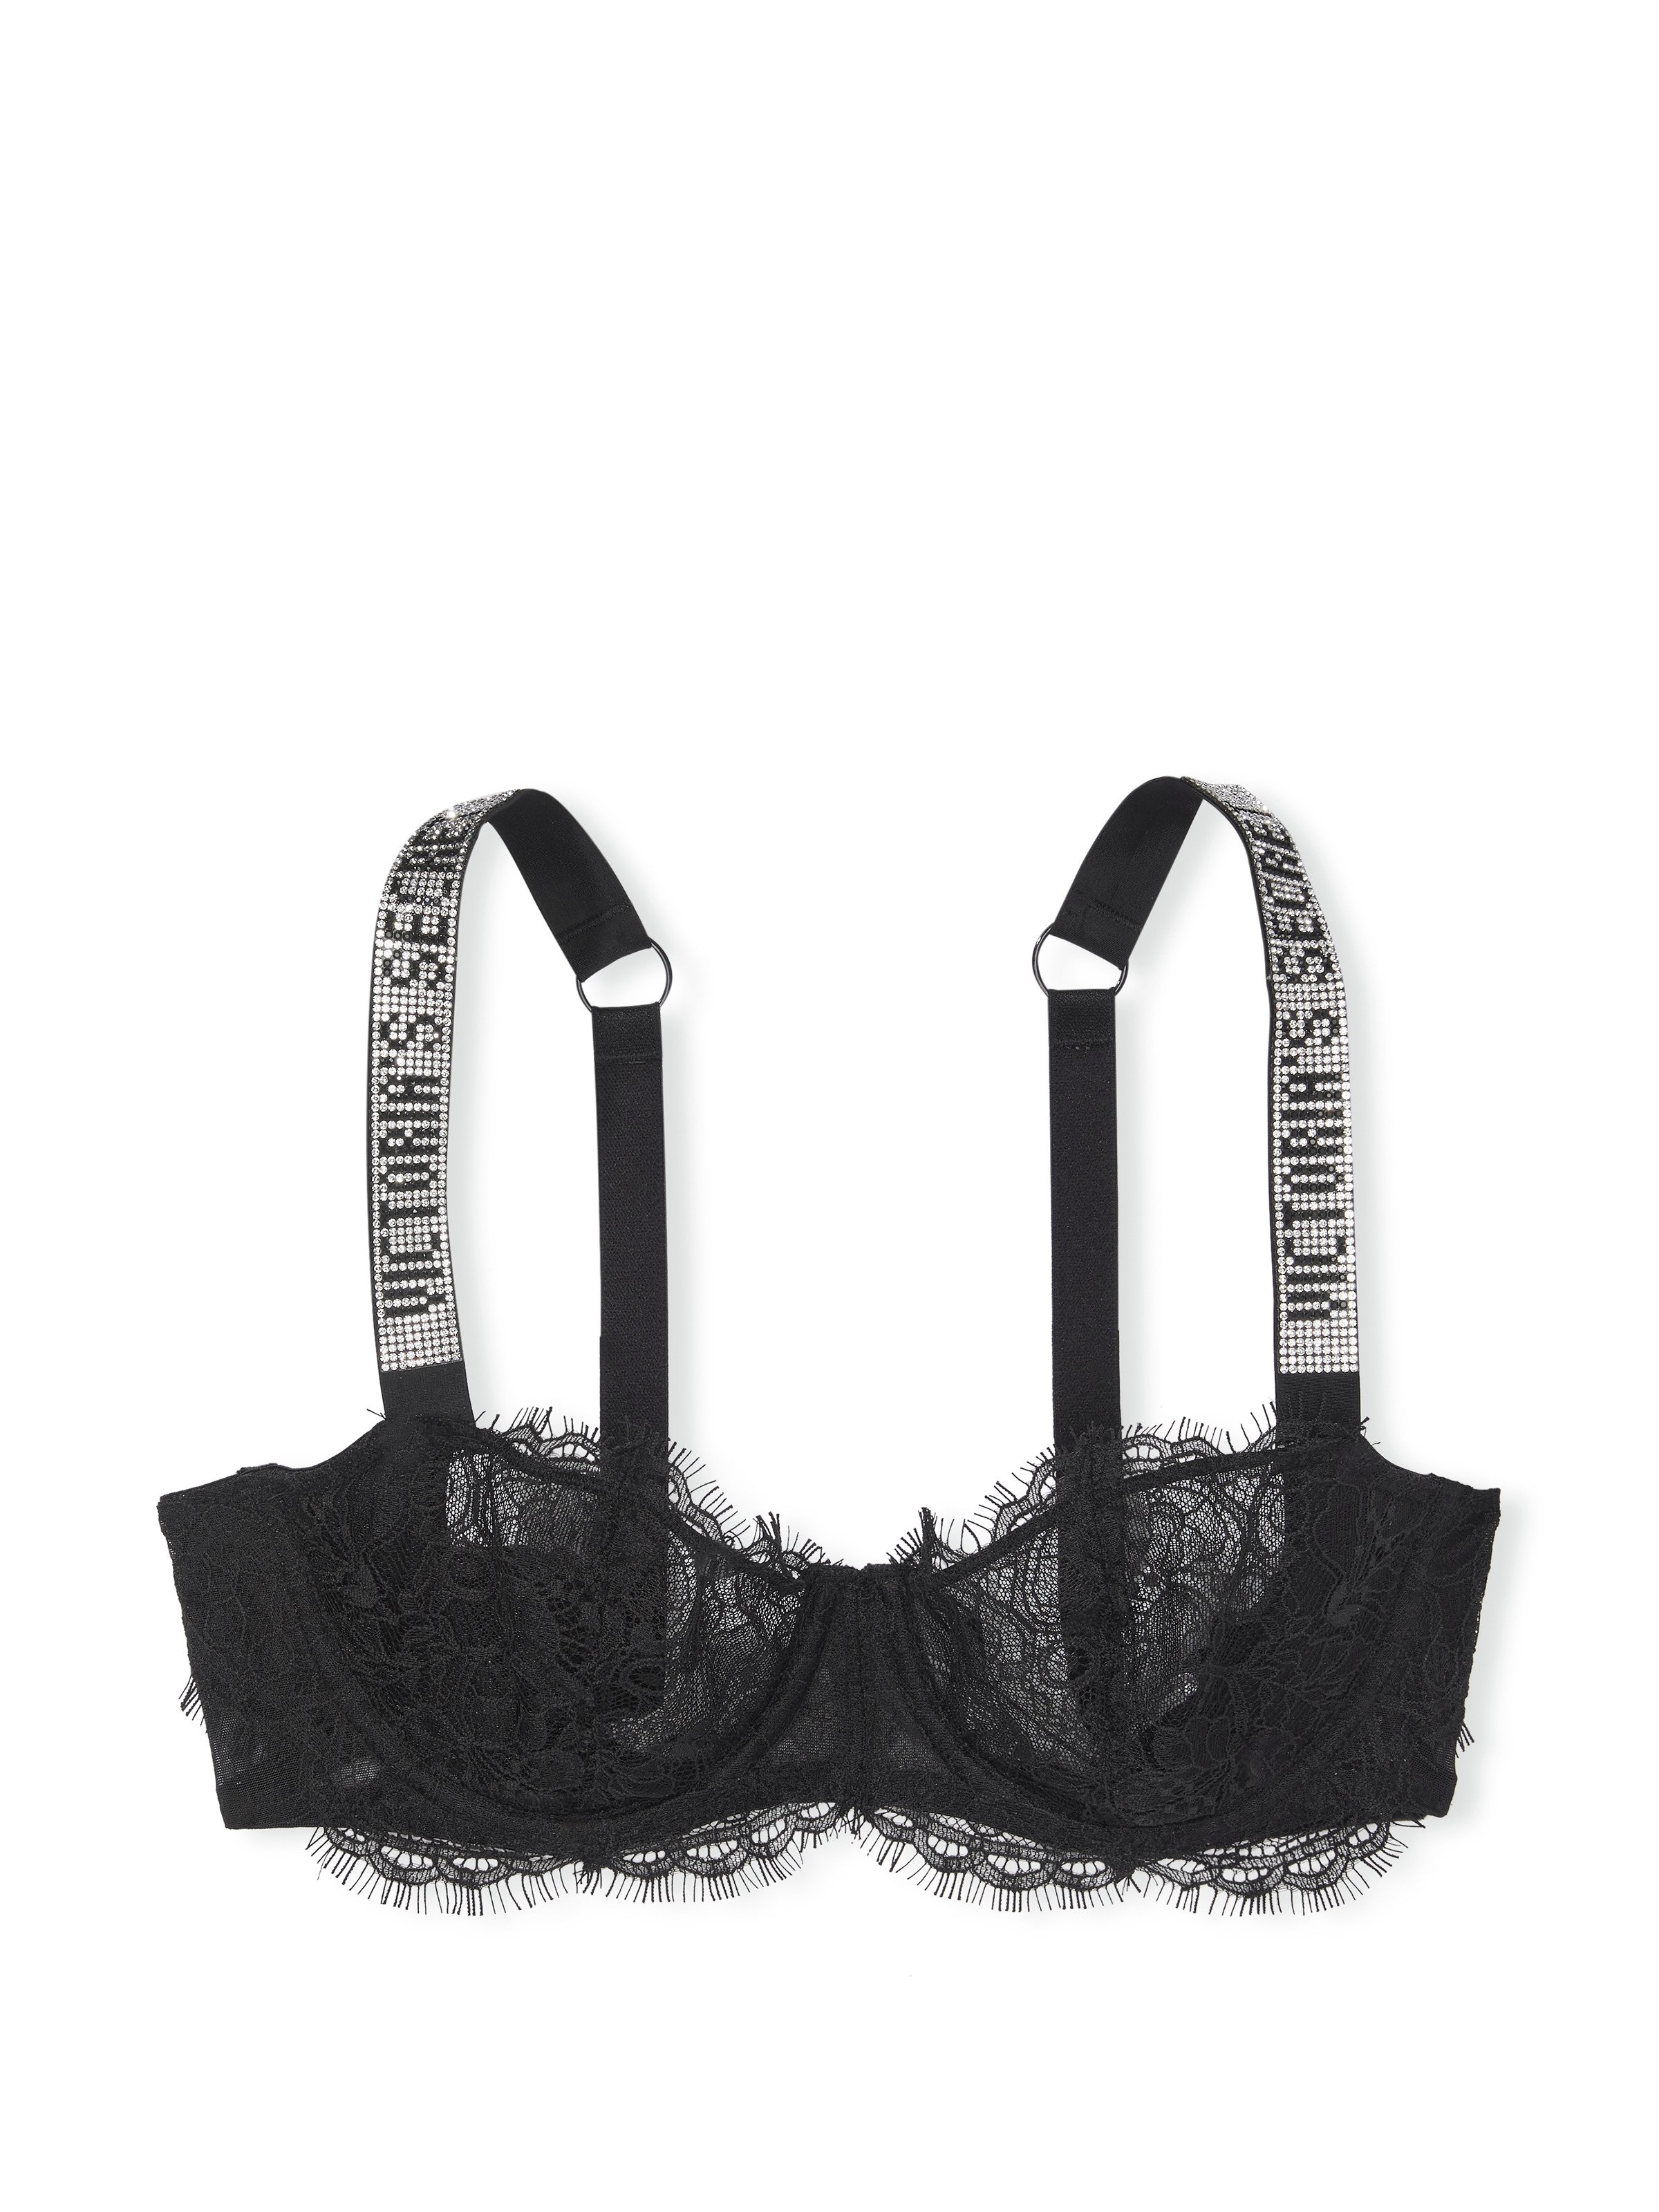 Victoria's Secret Victoria Secret Very Sexy Unlined Plunge Black Lace Bra  Size undefined - $23 - From Tori